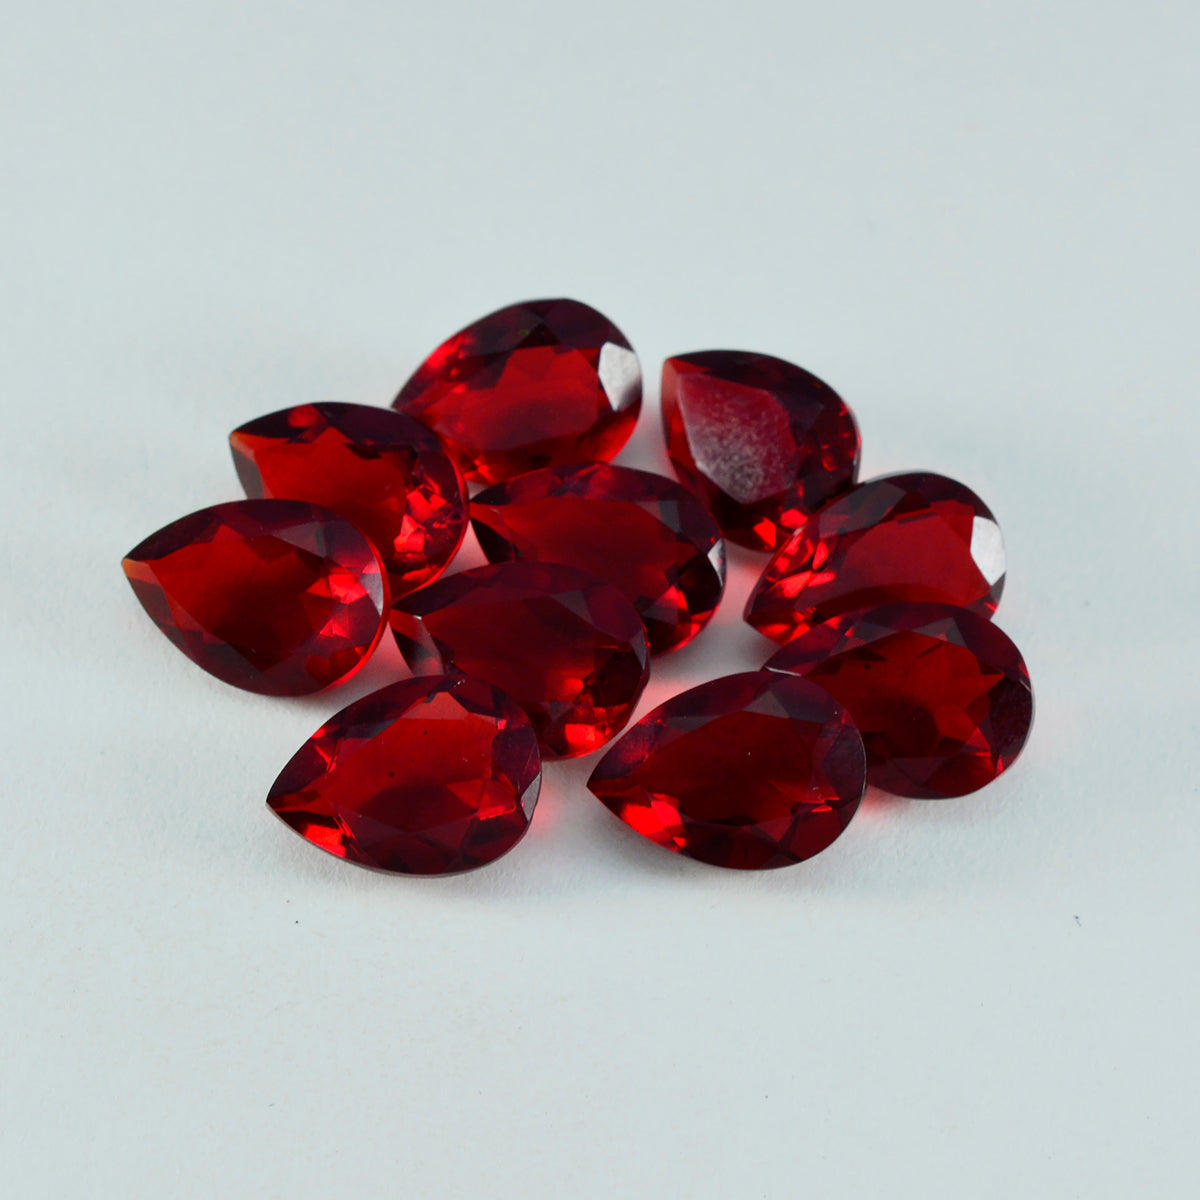 Riyogems 1PC Red Ruby CZ Faceted 7x10 mm Pear Shape amazing Quality Loose Gem